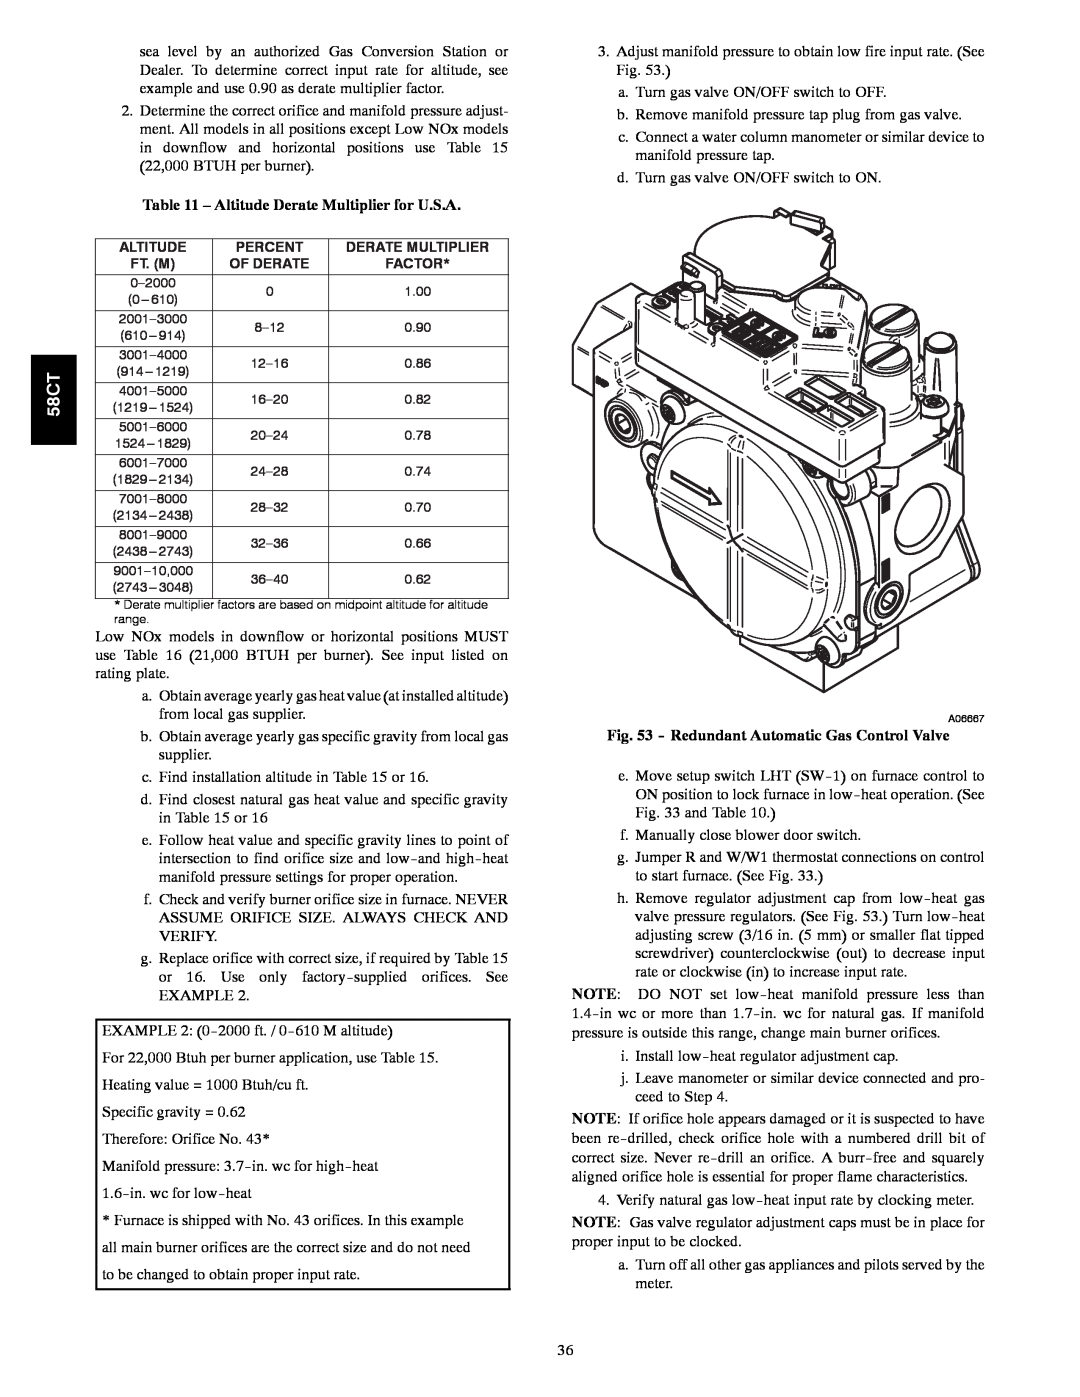 Carrier 58CTA/CTX instruction manual Altitude Derate Multiplier for U.S.A, Redundant Automatic Gas Control Valve 